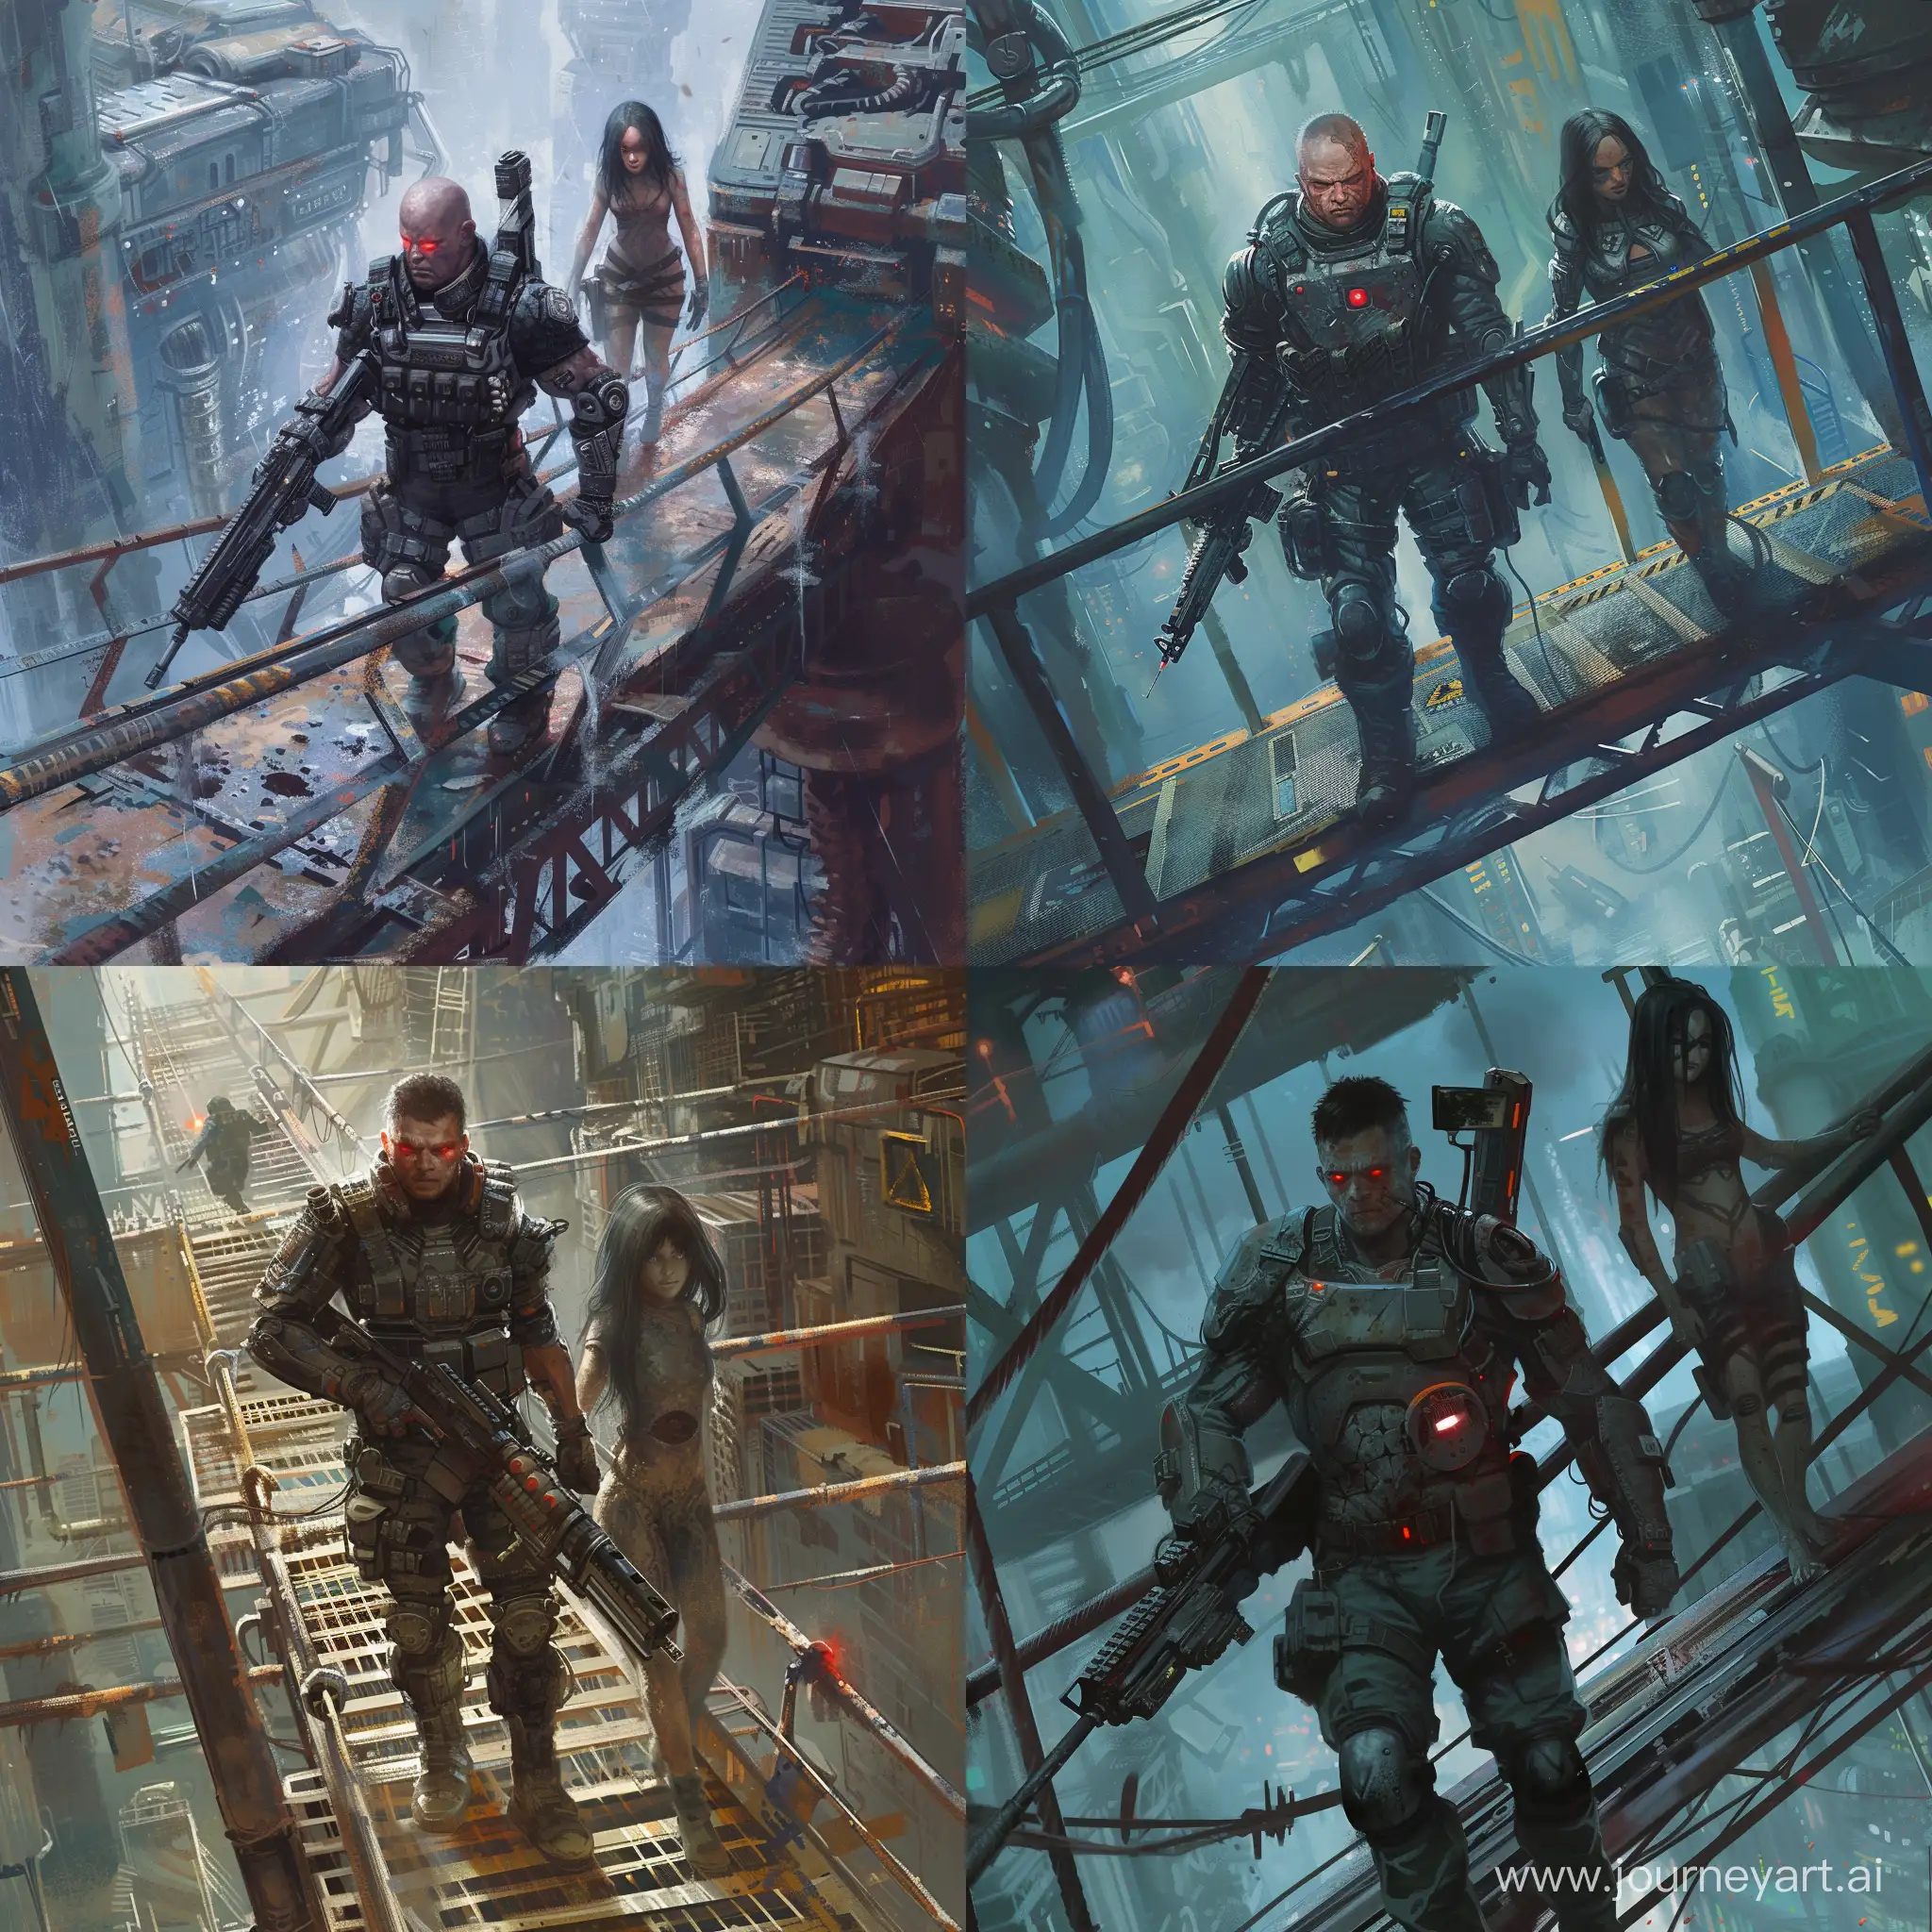 PostApocalyptic-Soldier-Battling-Monsters-on-Metallic-Bridge-Over-Mechanical-City